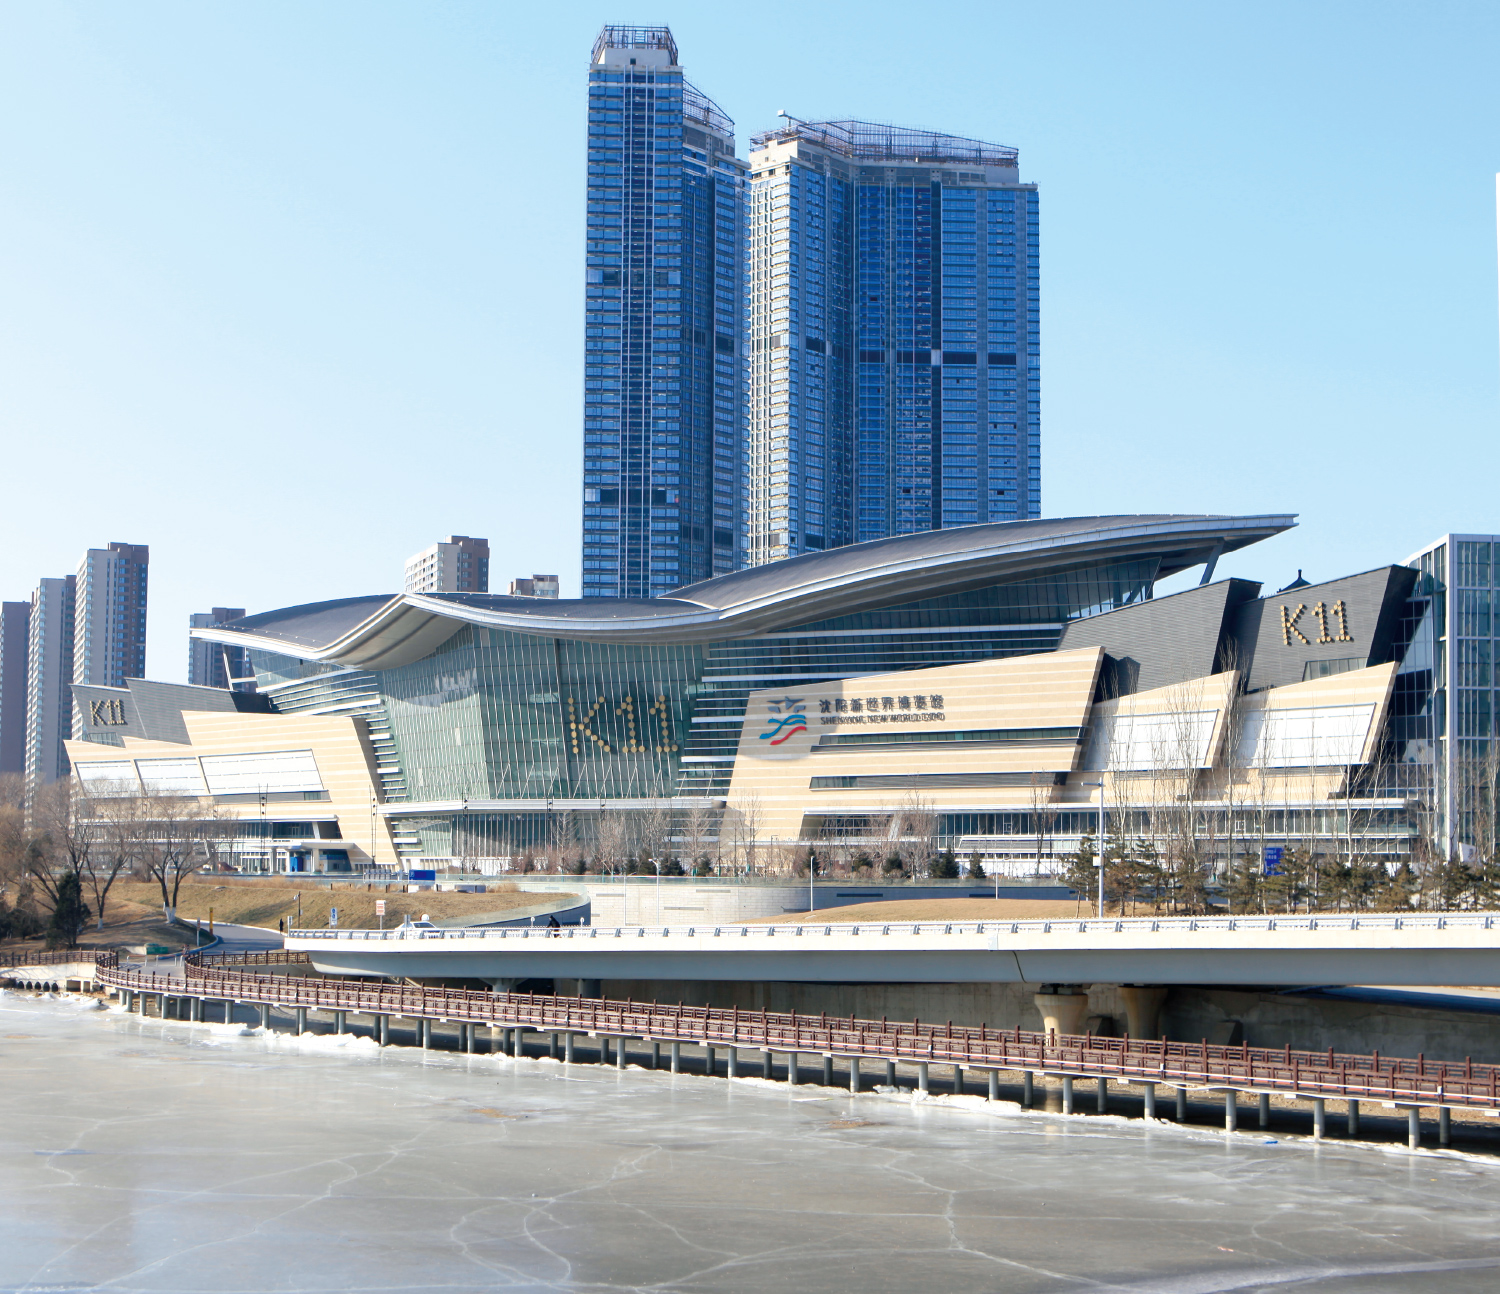 Shenyang New World EXPO